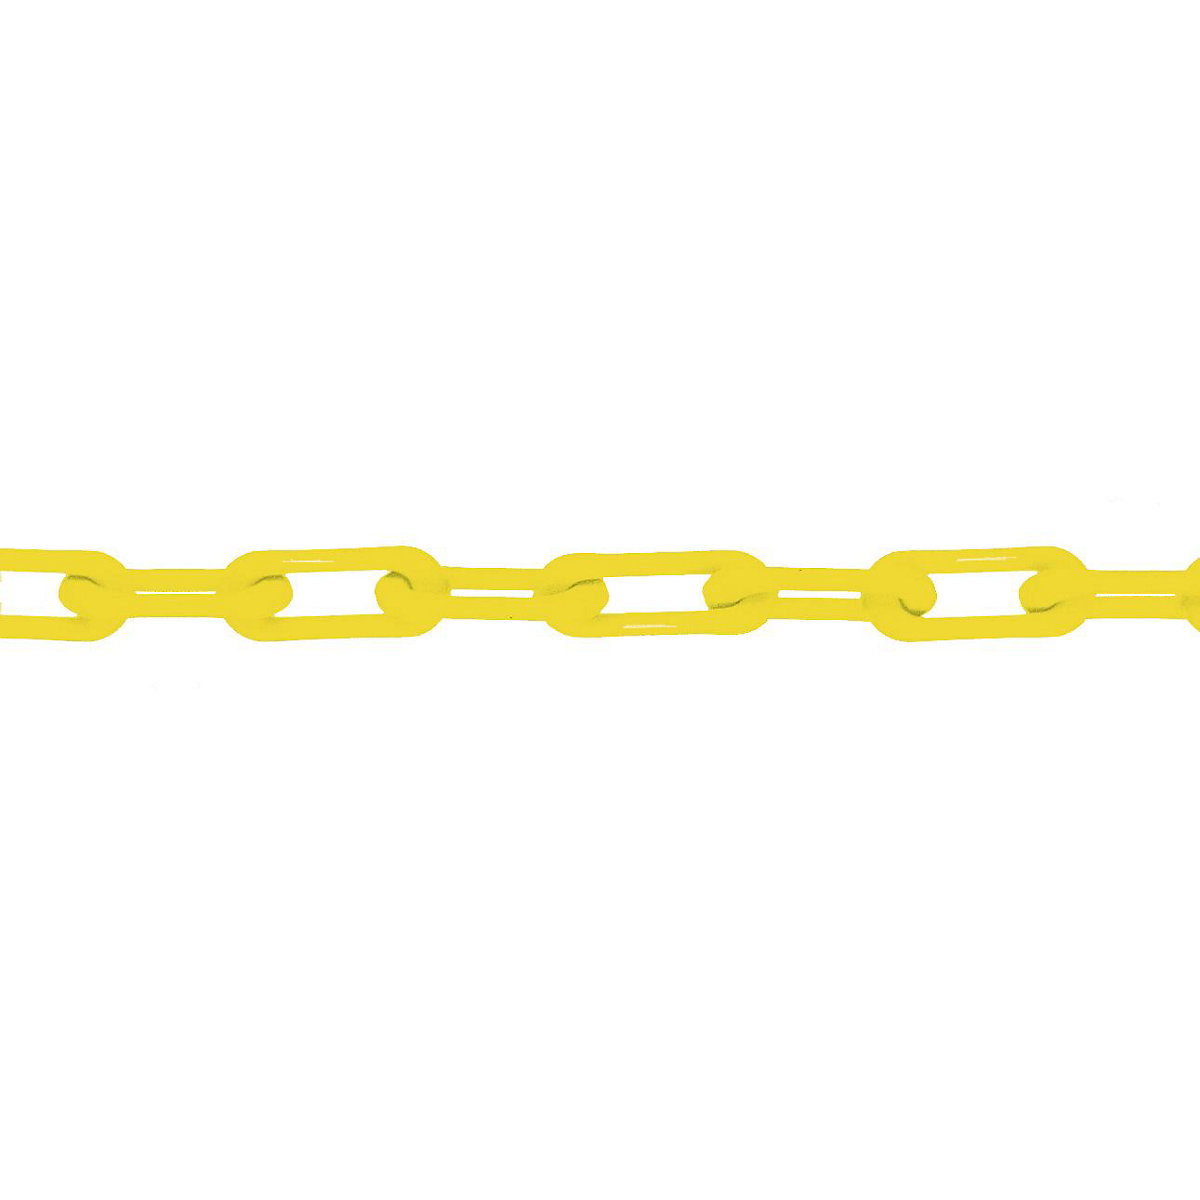 Nylon-kwaliteitsketting, MNK-kwaliteit 6, lengte 50 m, geel-7